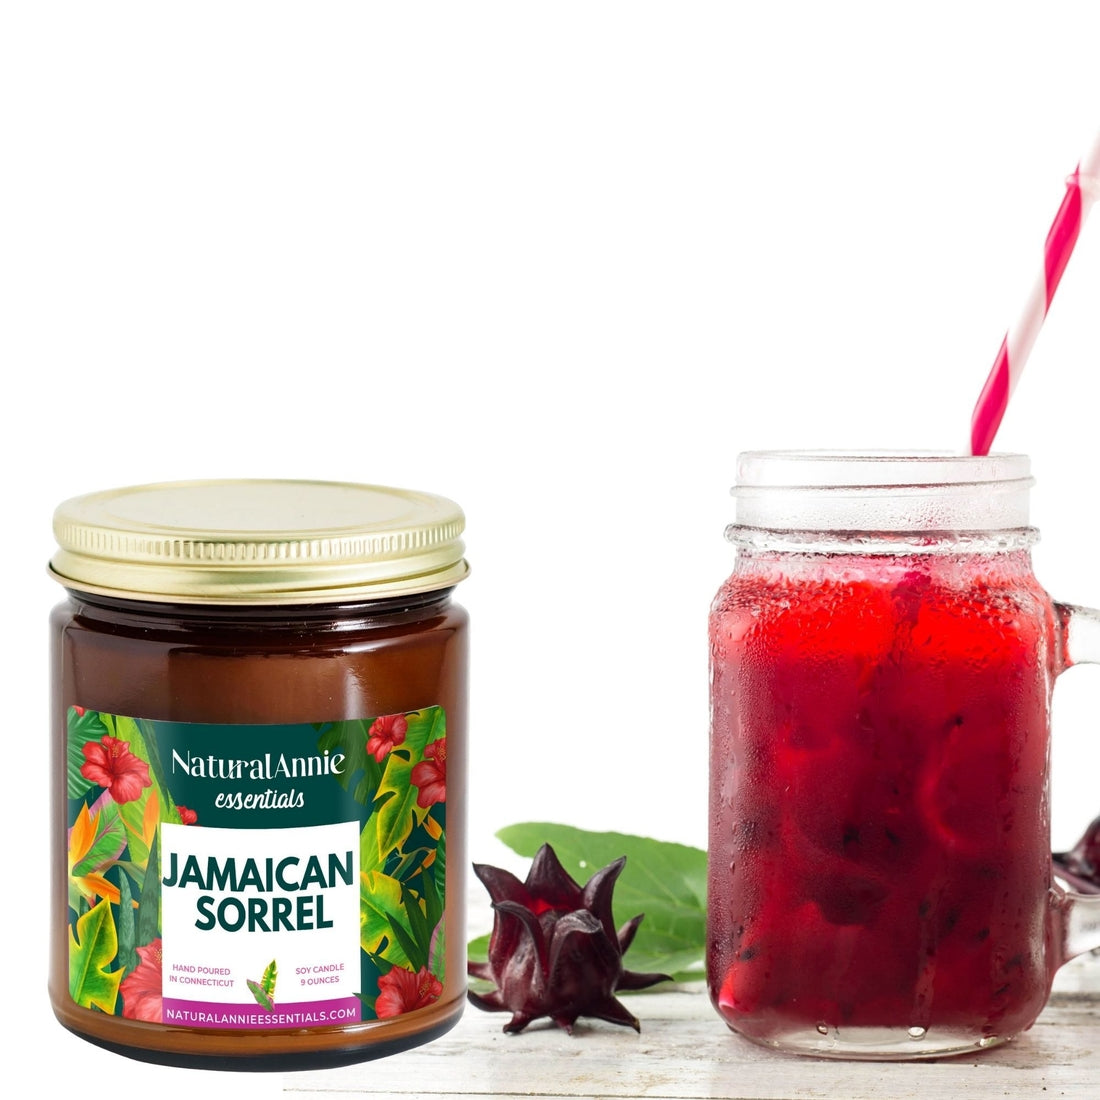 JAMAICAN SORREL CANDLE